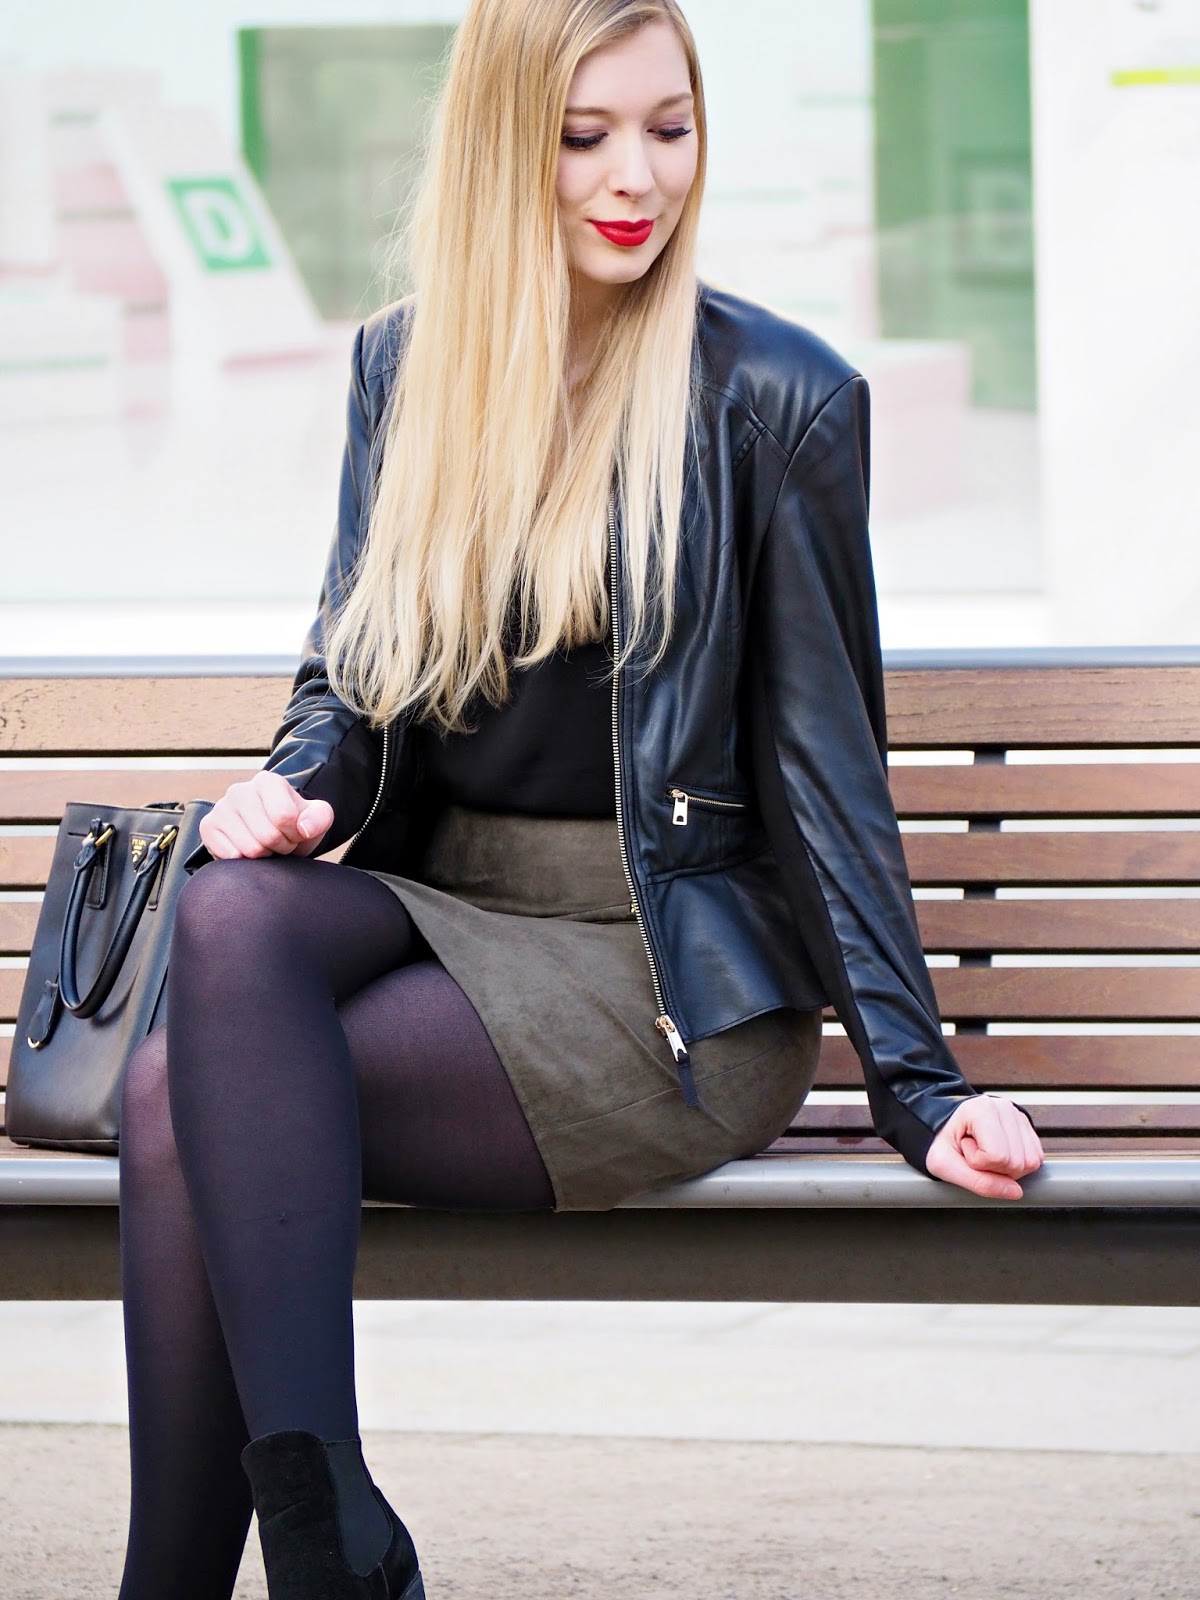 Winter style sellyssecrets.blogspot.co.uk - Fashionmylegs : The tights ...